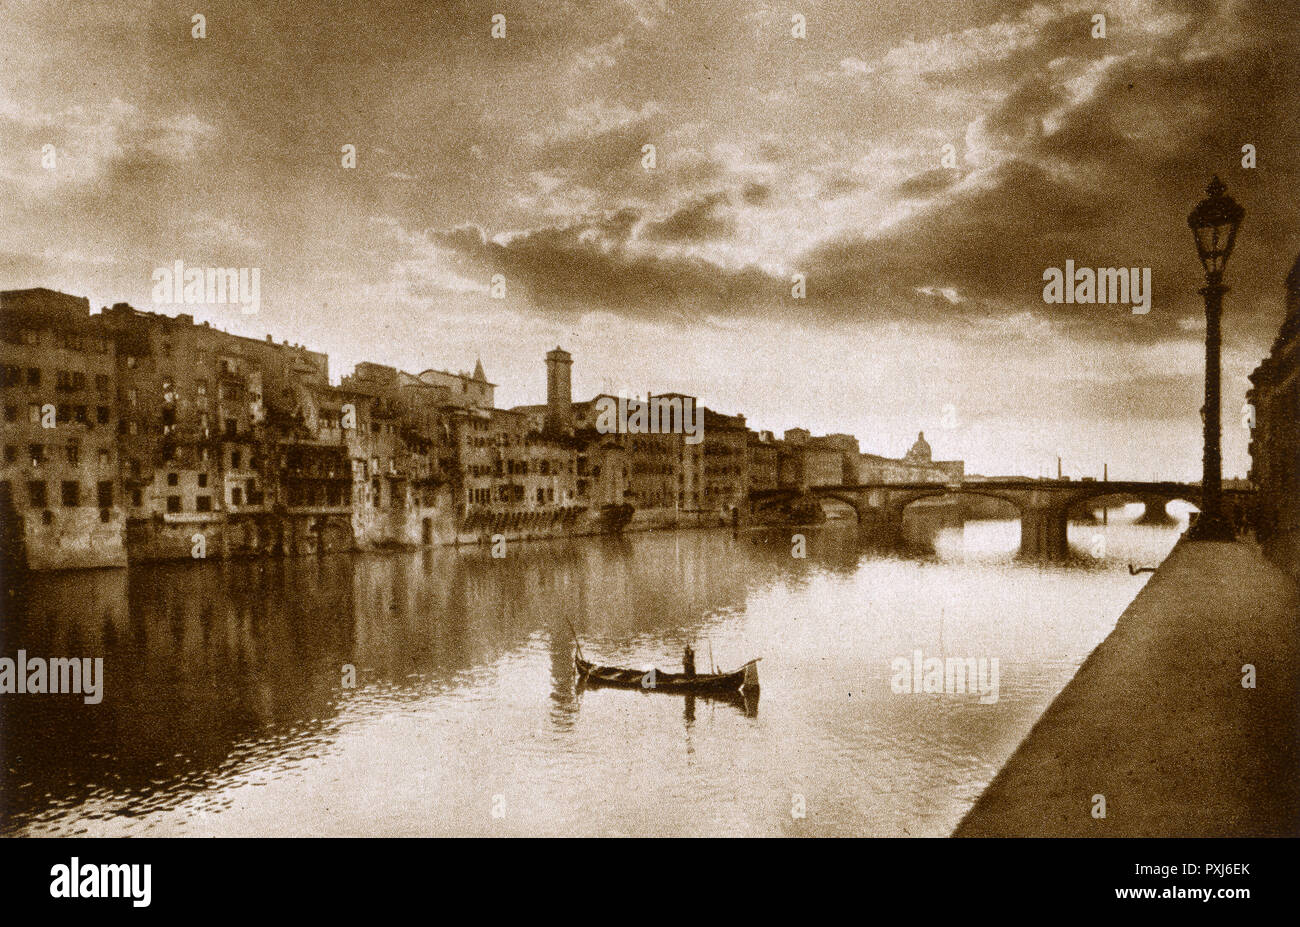 Florenz, Italien - der Fluss Arno - Ponte A S. Trinita Stockfoto